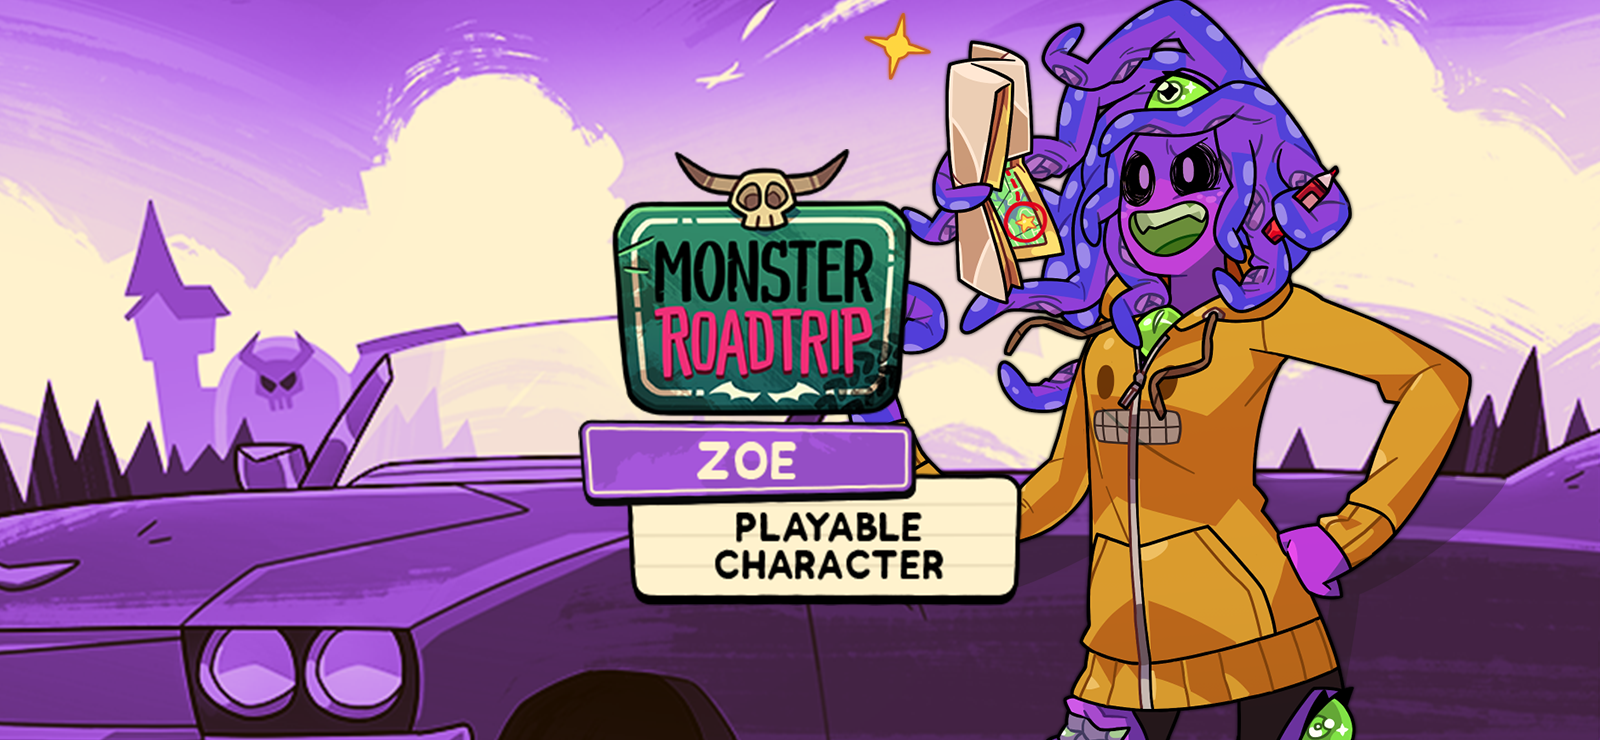 Monster Roadtrip - Playable Character - Zoe